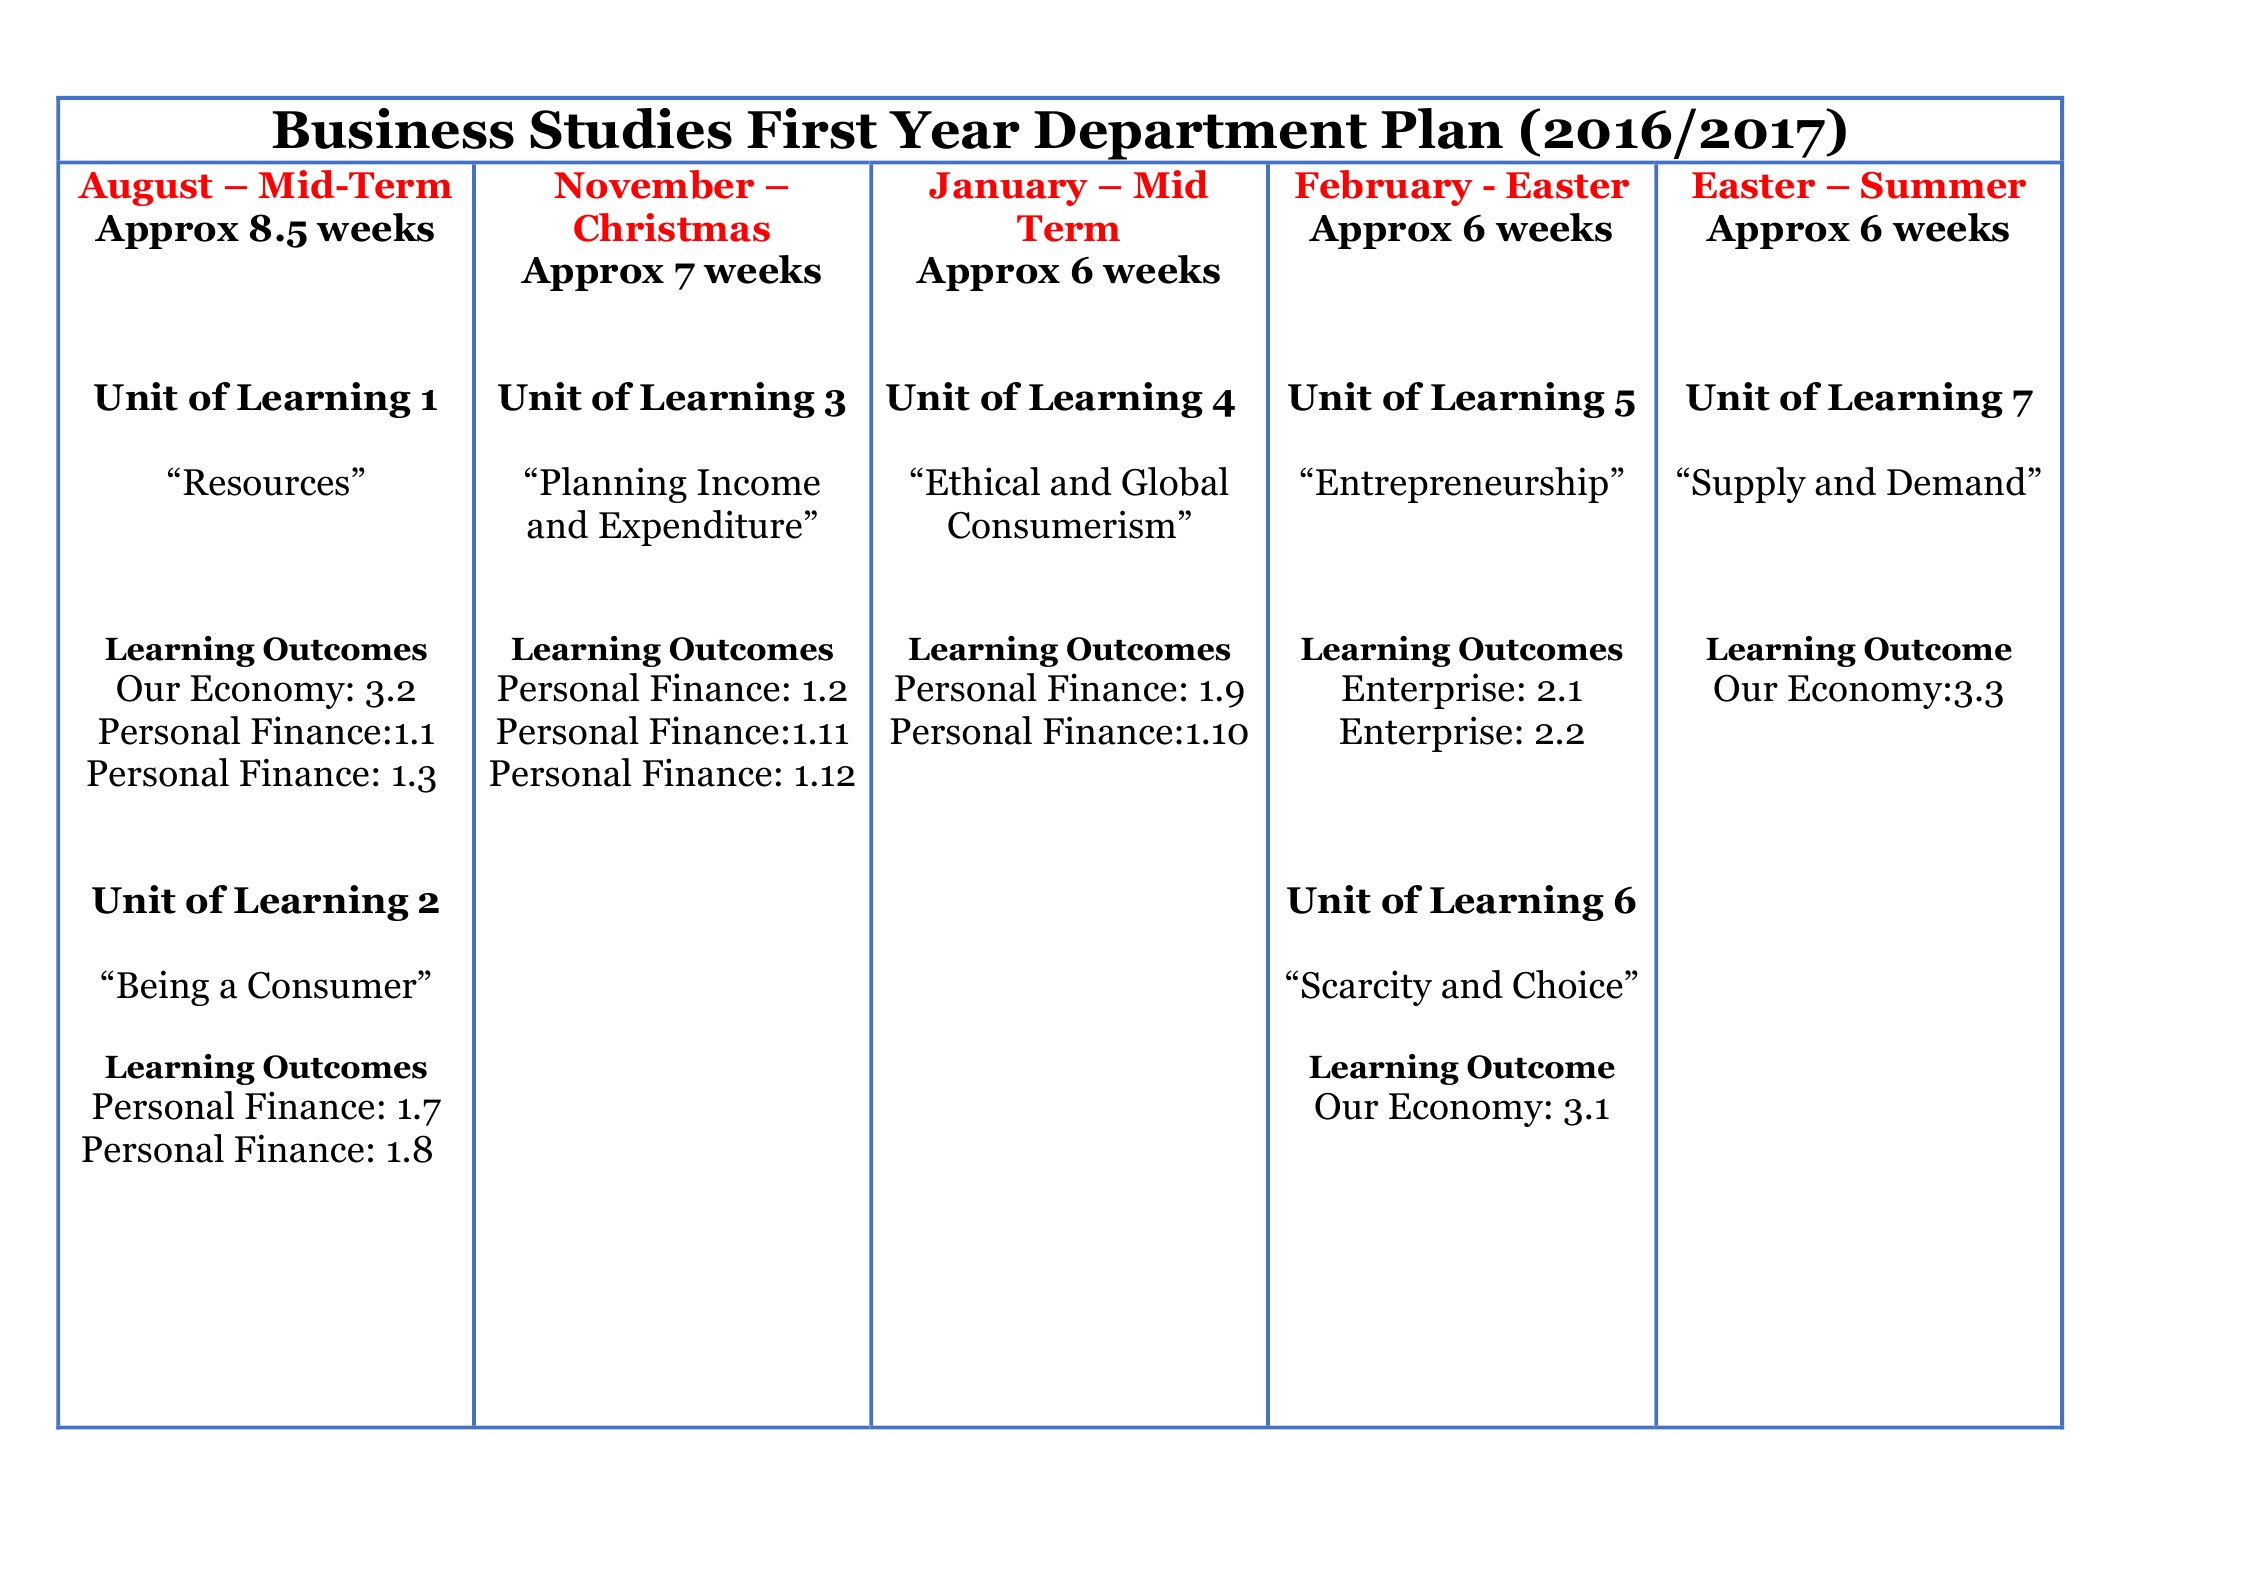 Business Studies First Year Plan